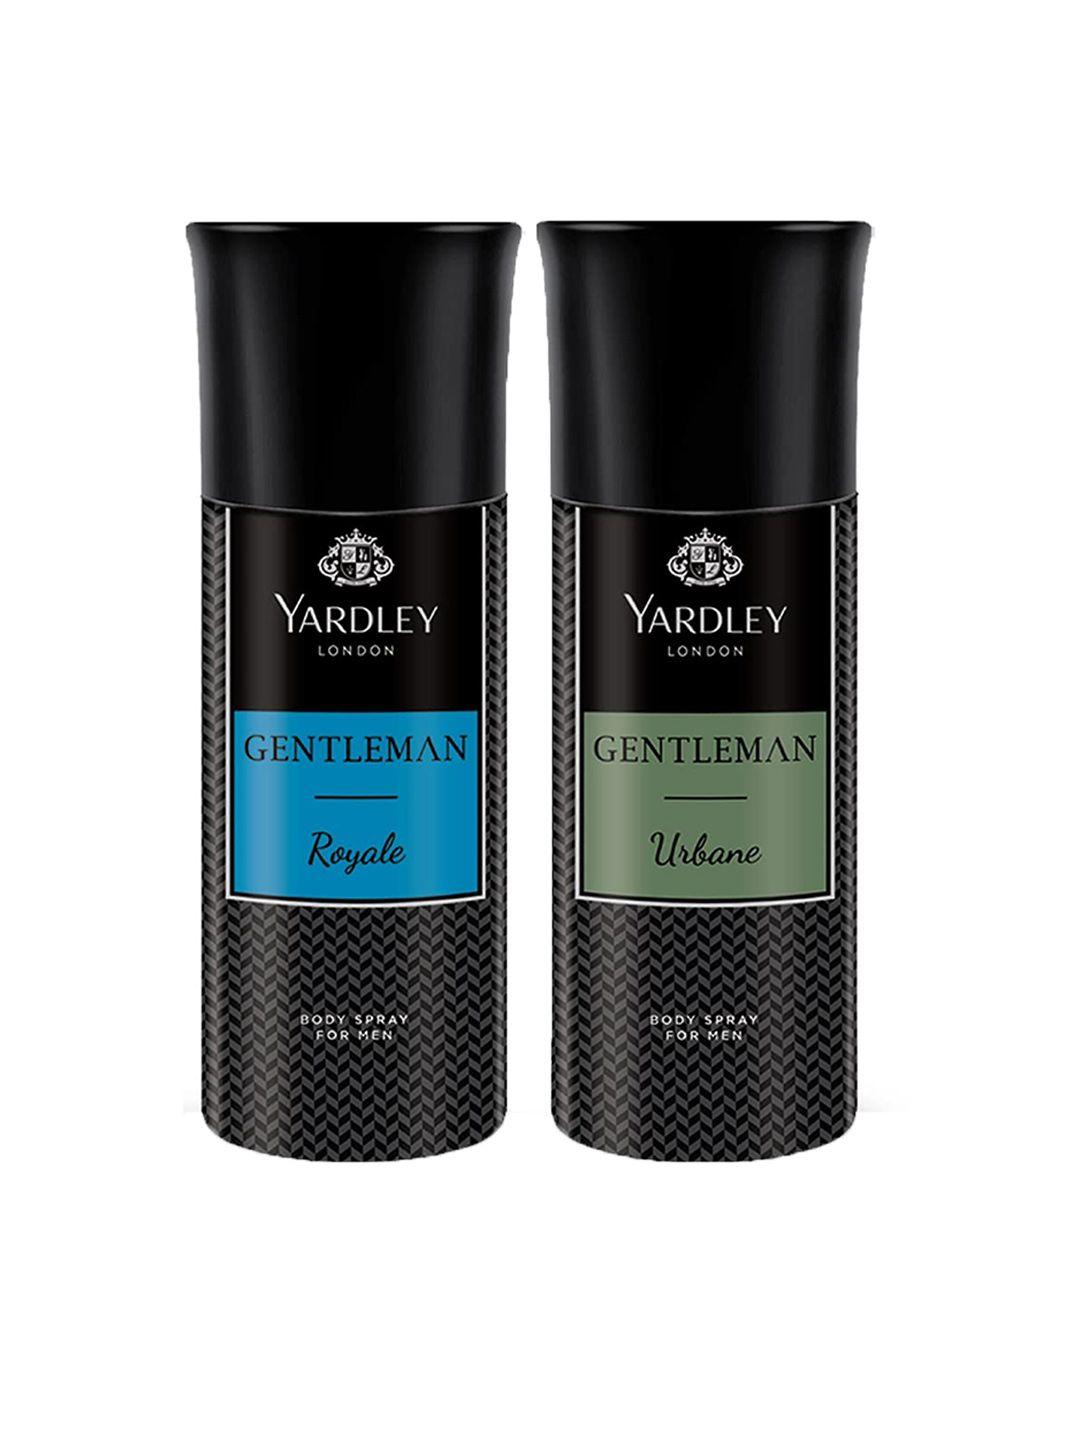 yardley-london-gentleman-royal-and-gentleman-urbane-body-spray-combo-300-ml